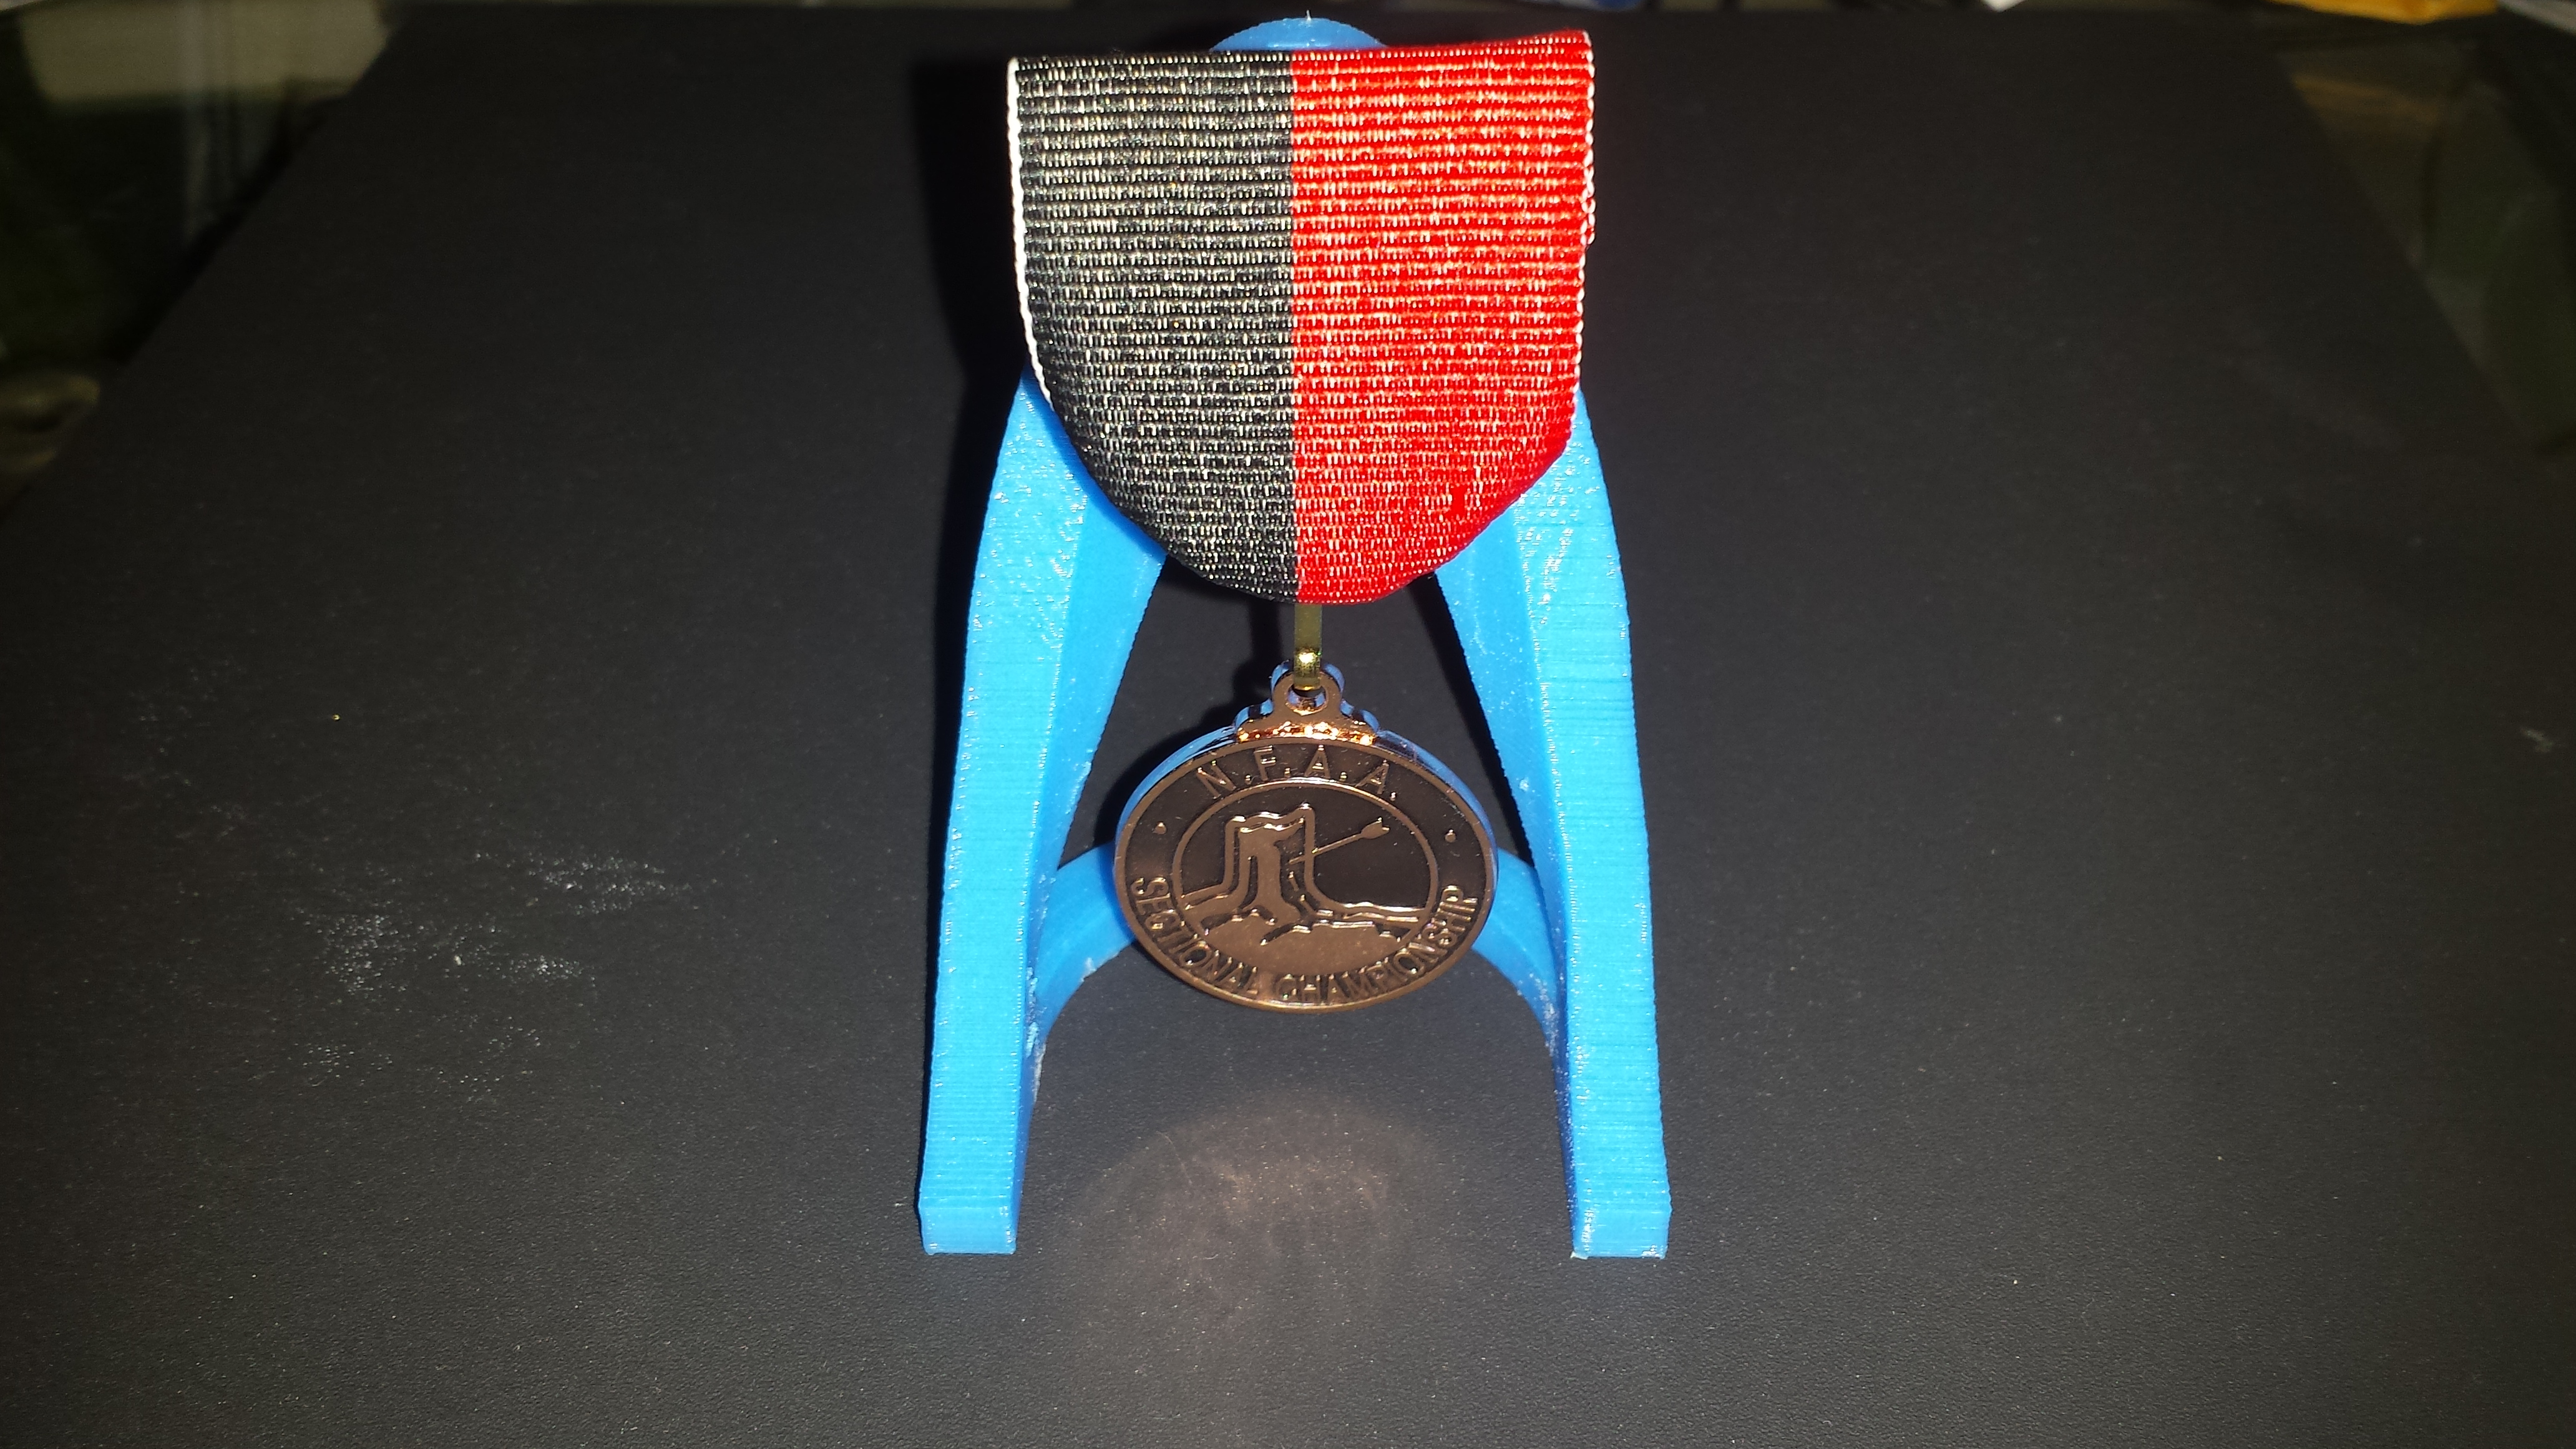 Ribbon Drape Medal Display Stand